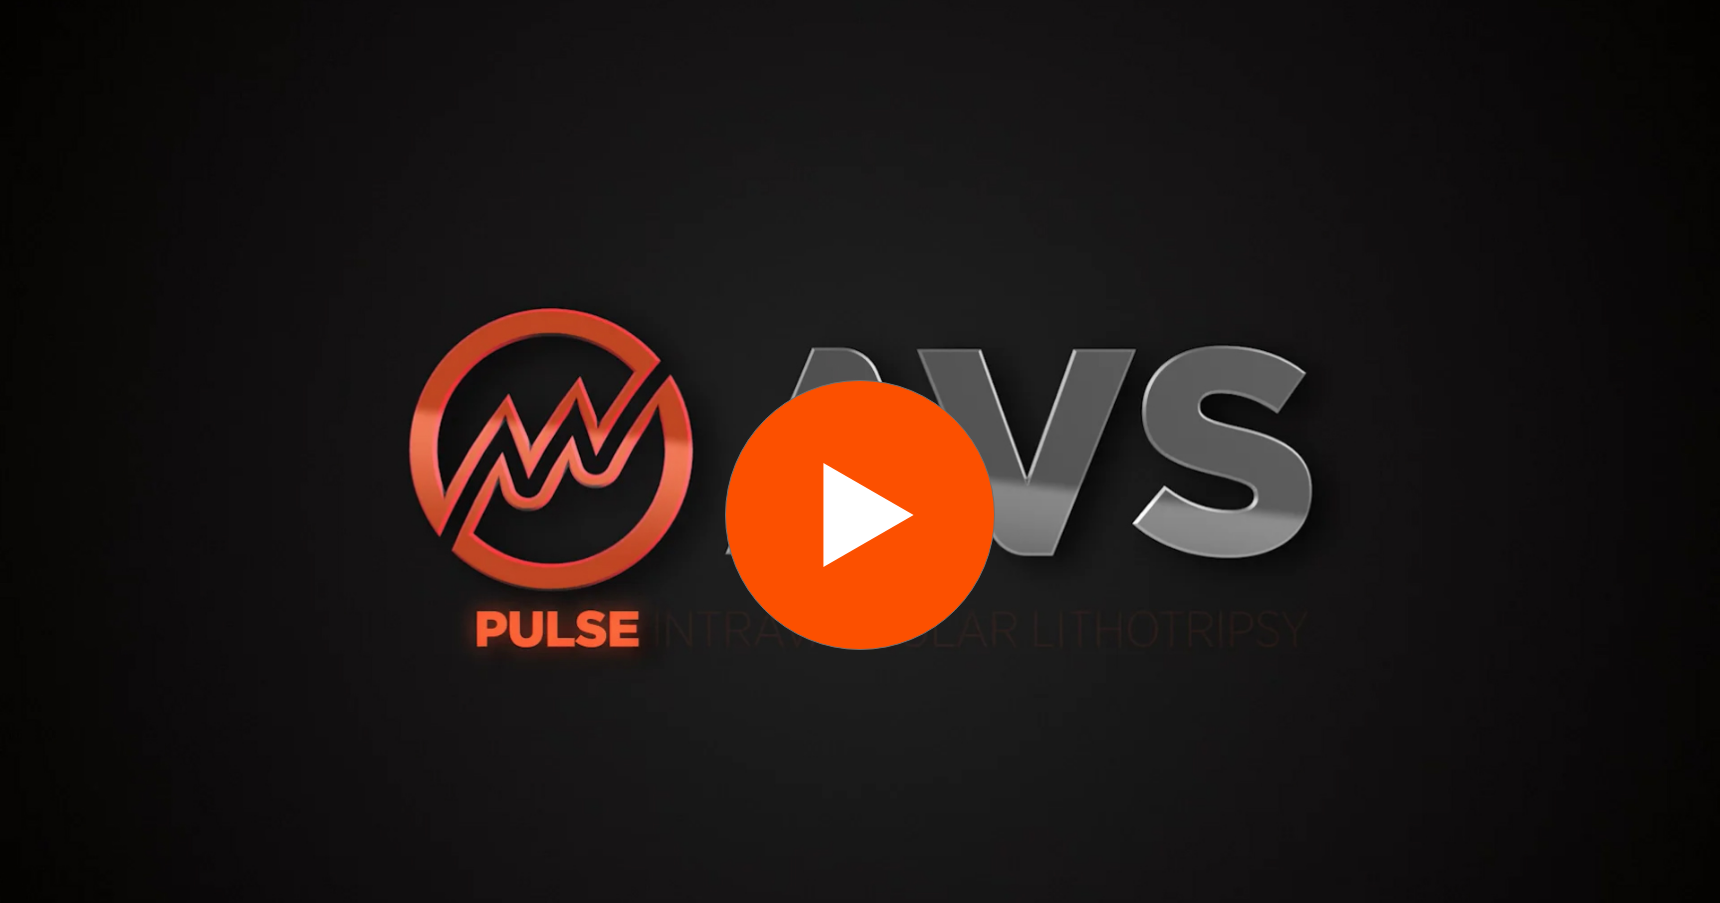 Pulse Logo PNG Transparent & SVG Vector - Freebie Supply